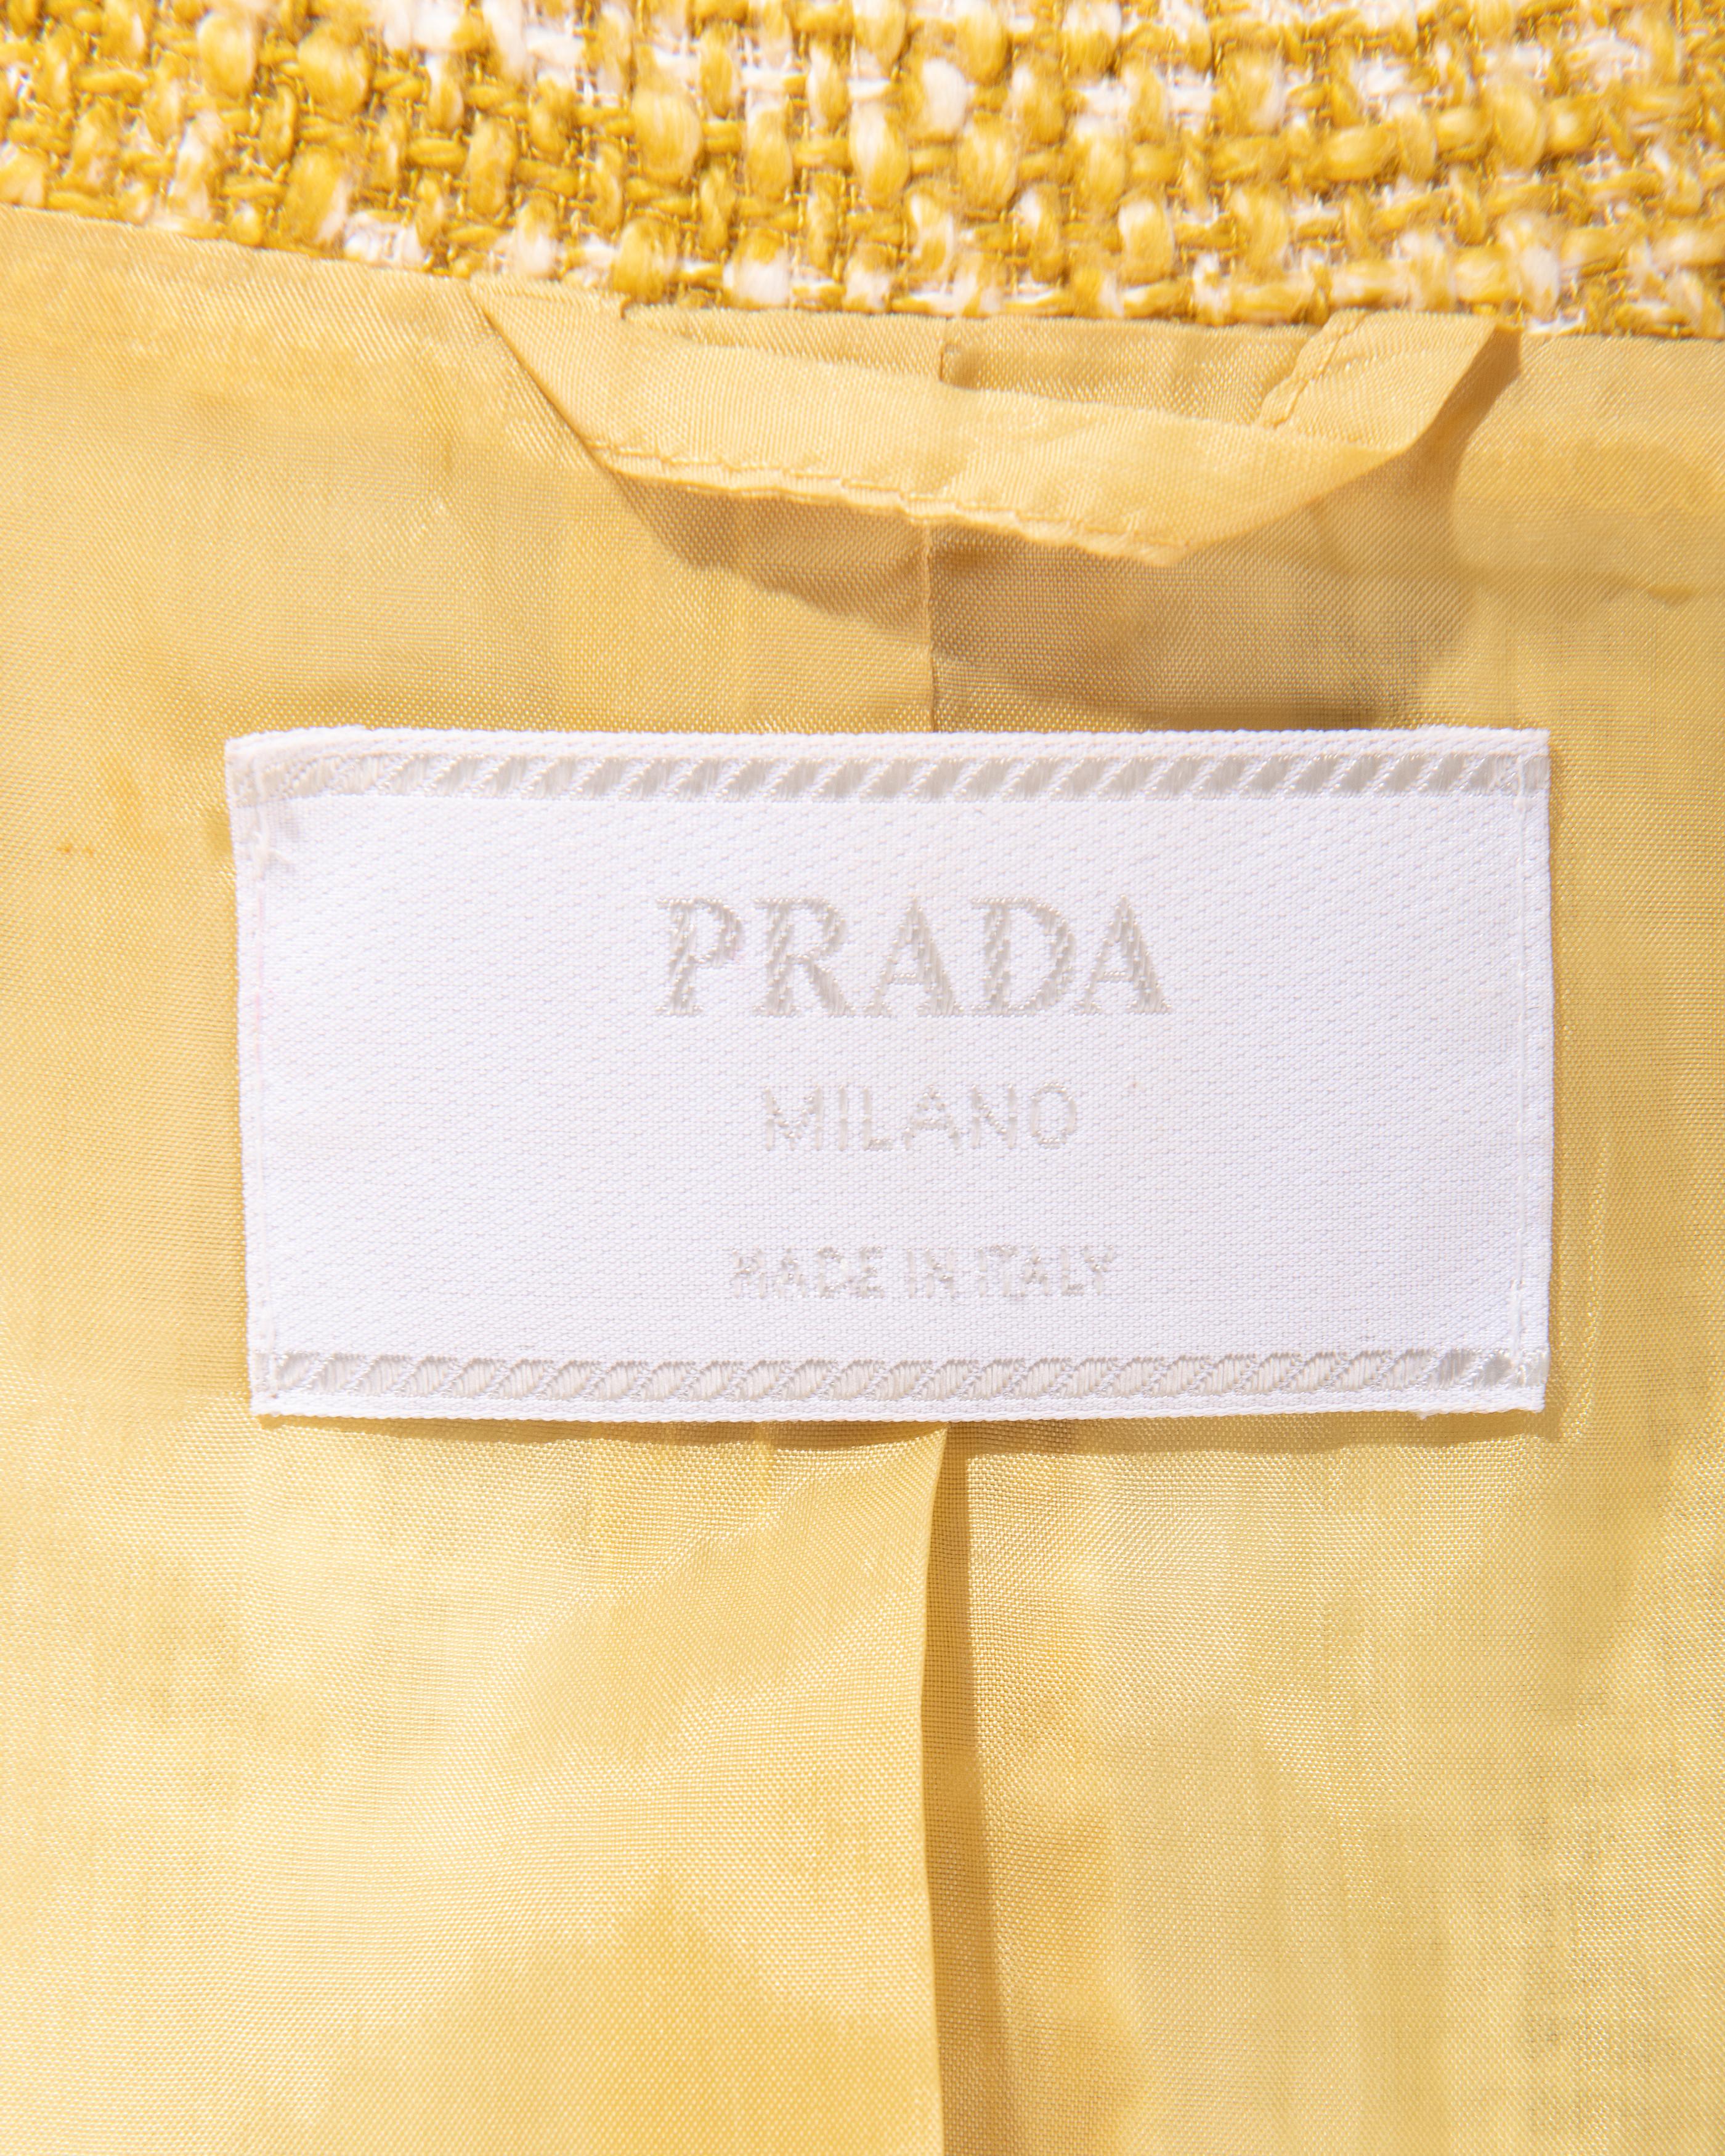 S/S 1996 Prada by Miuccia Prada Yellow-Green Tweed Skirt Set 11